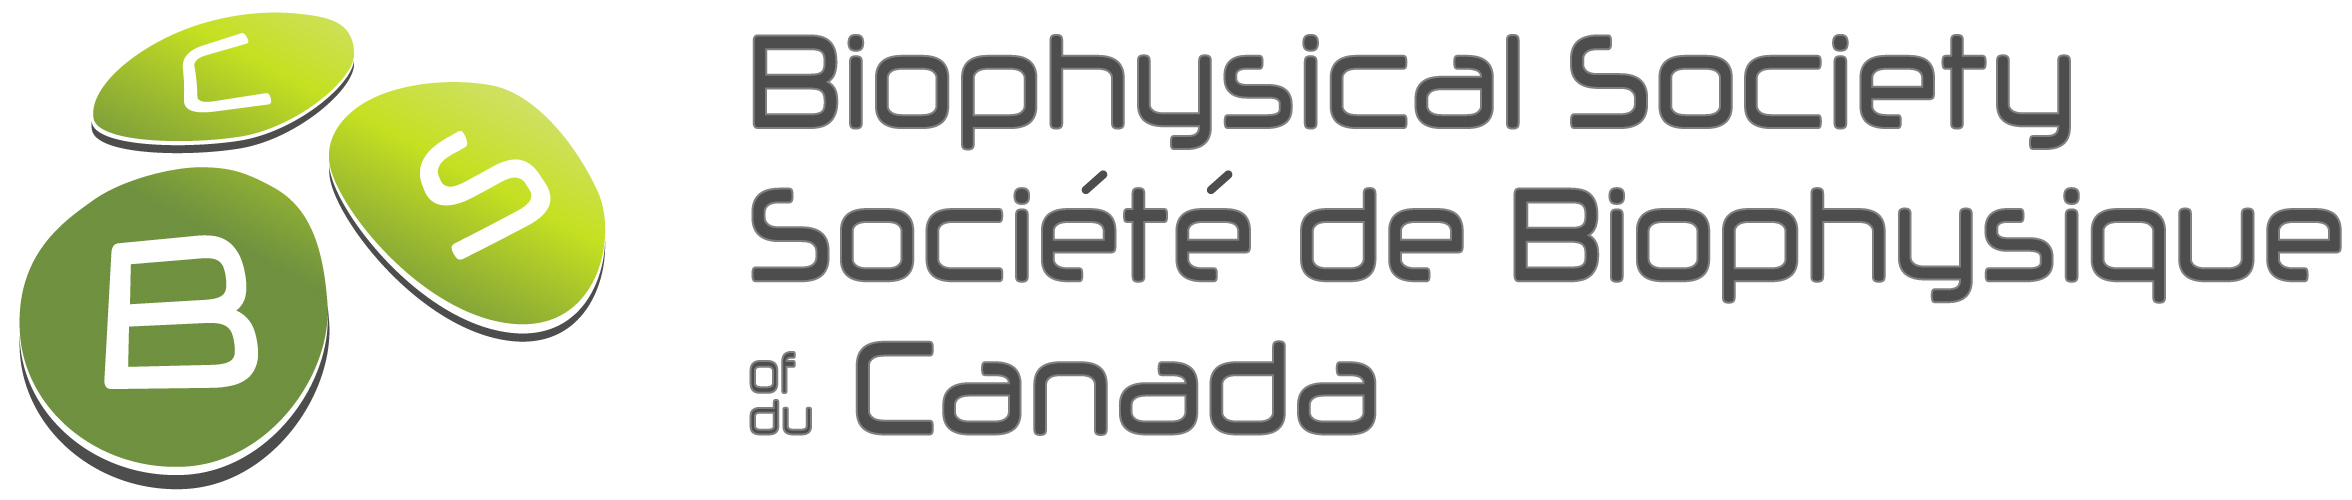 Biophysical Society of Canada logo